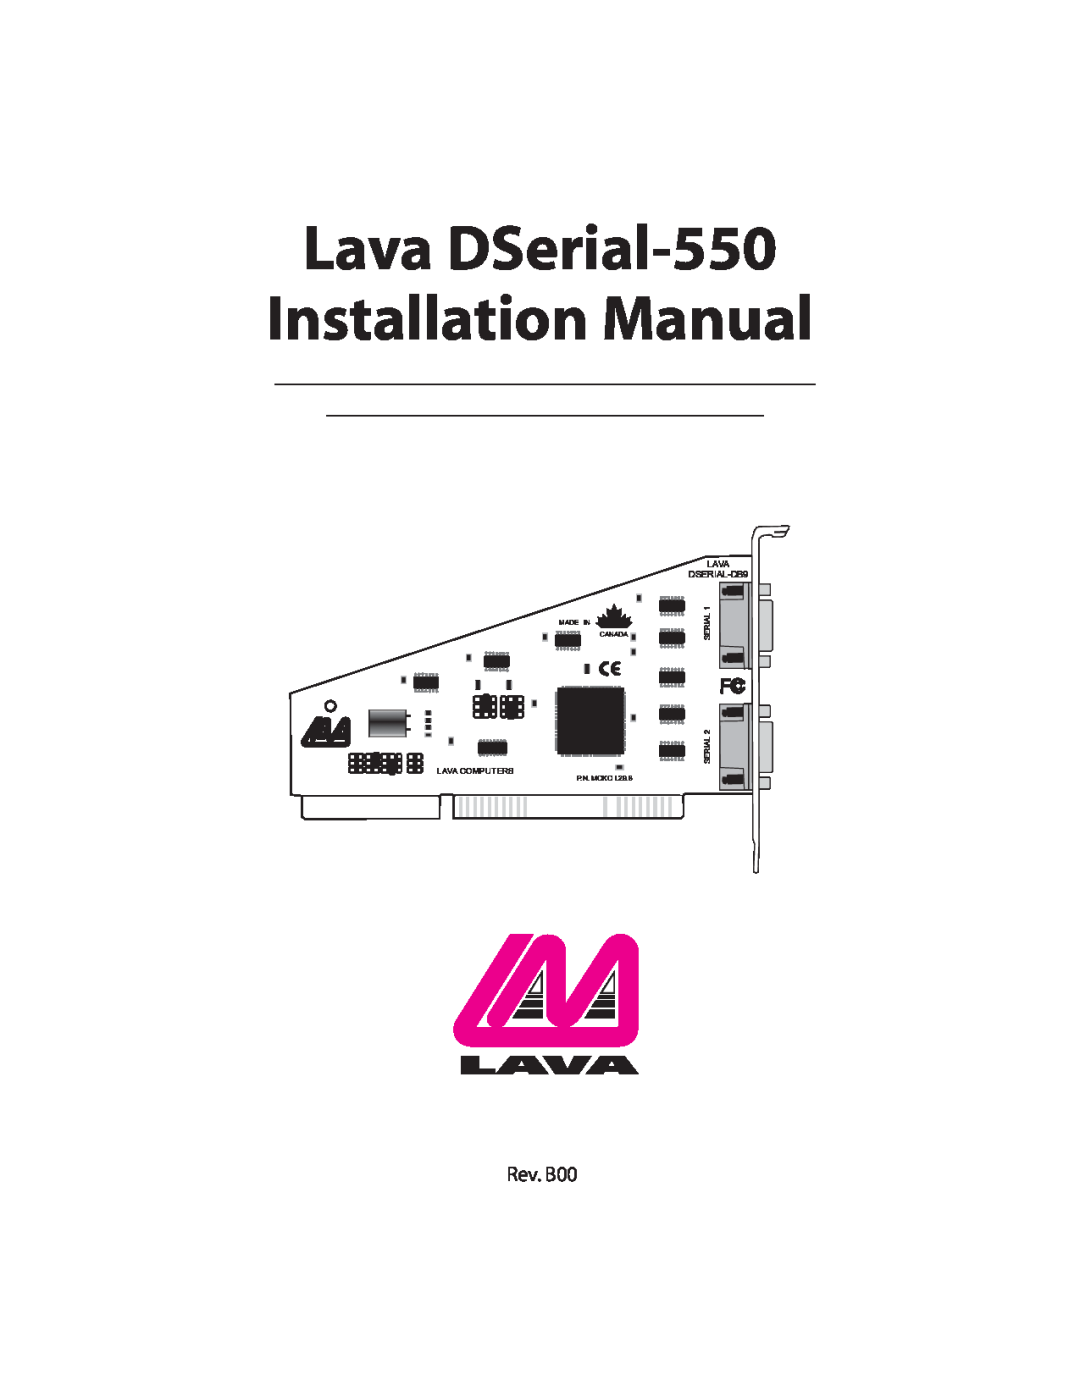 Lava Computer installation manual Lava DSerial-550 Installation Manual, Rev. B00, LAVA DSERIAL-DB9 SERIAL 2SERIAL 